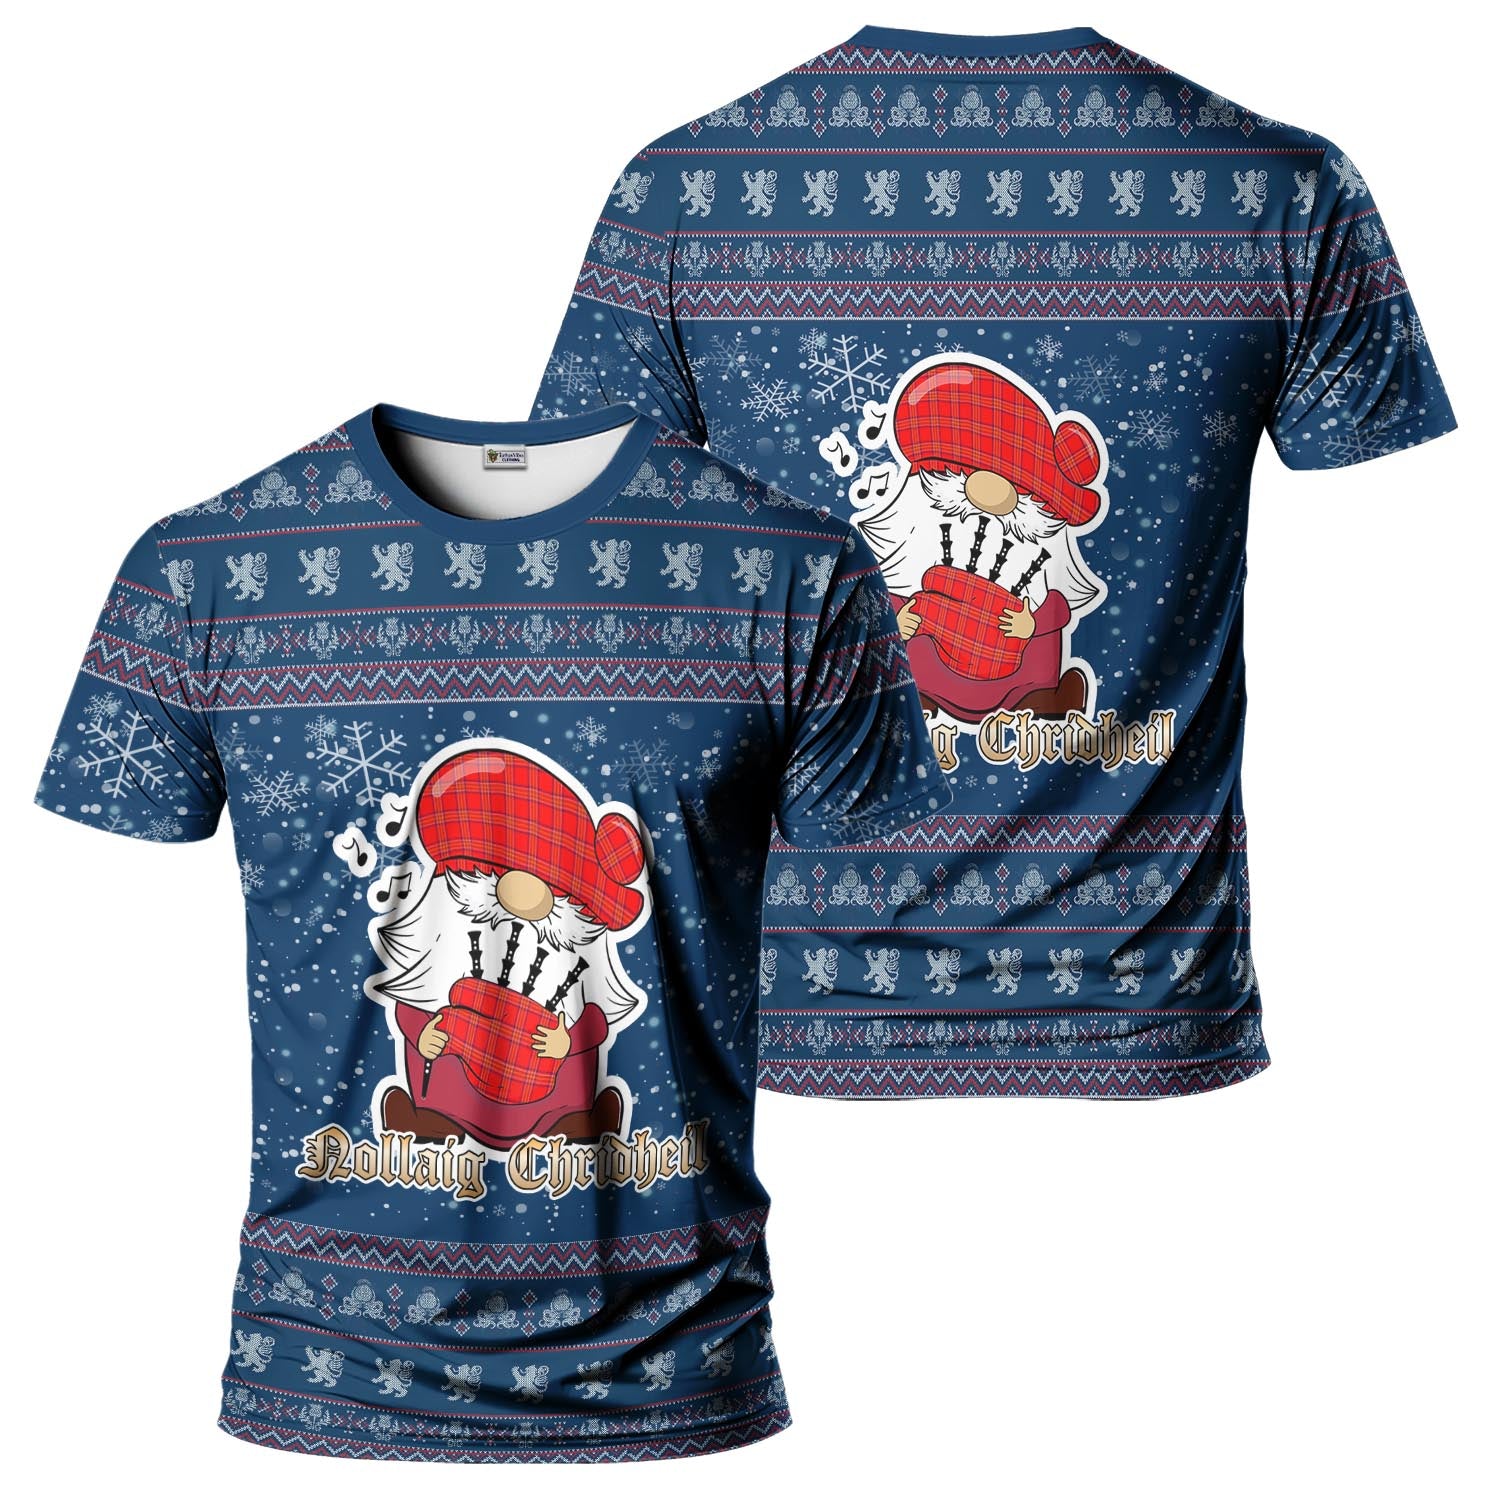 Burnett Modern Clan Christmas Family T-Shirt with Funny Gnome Playing Bagpipes Kid's Shirt Blue - Tartanvibesclothing